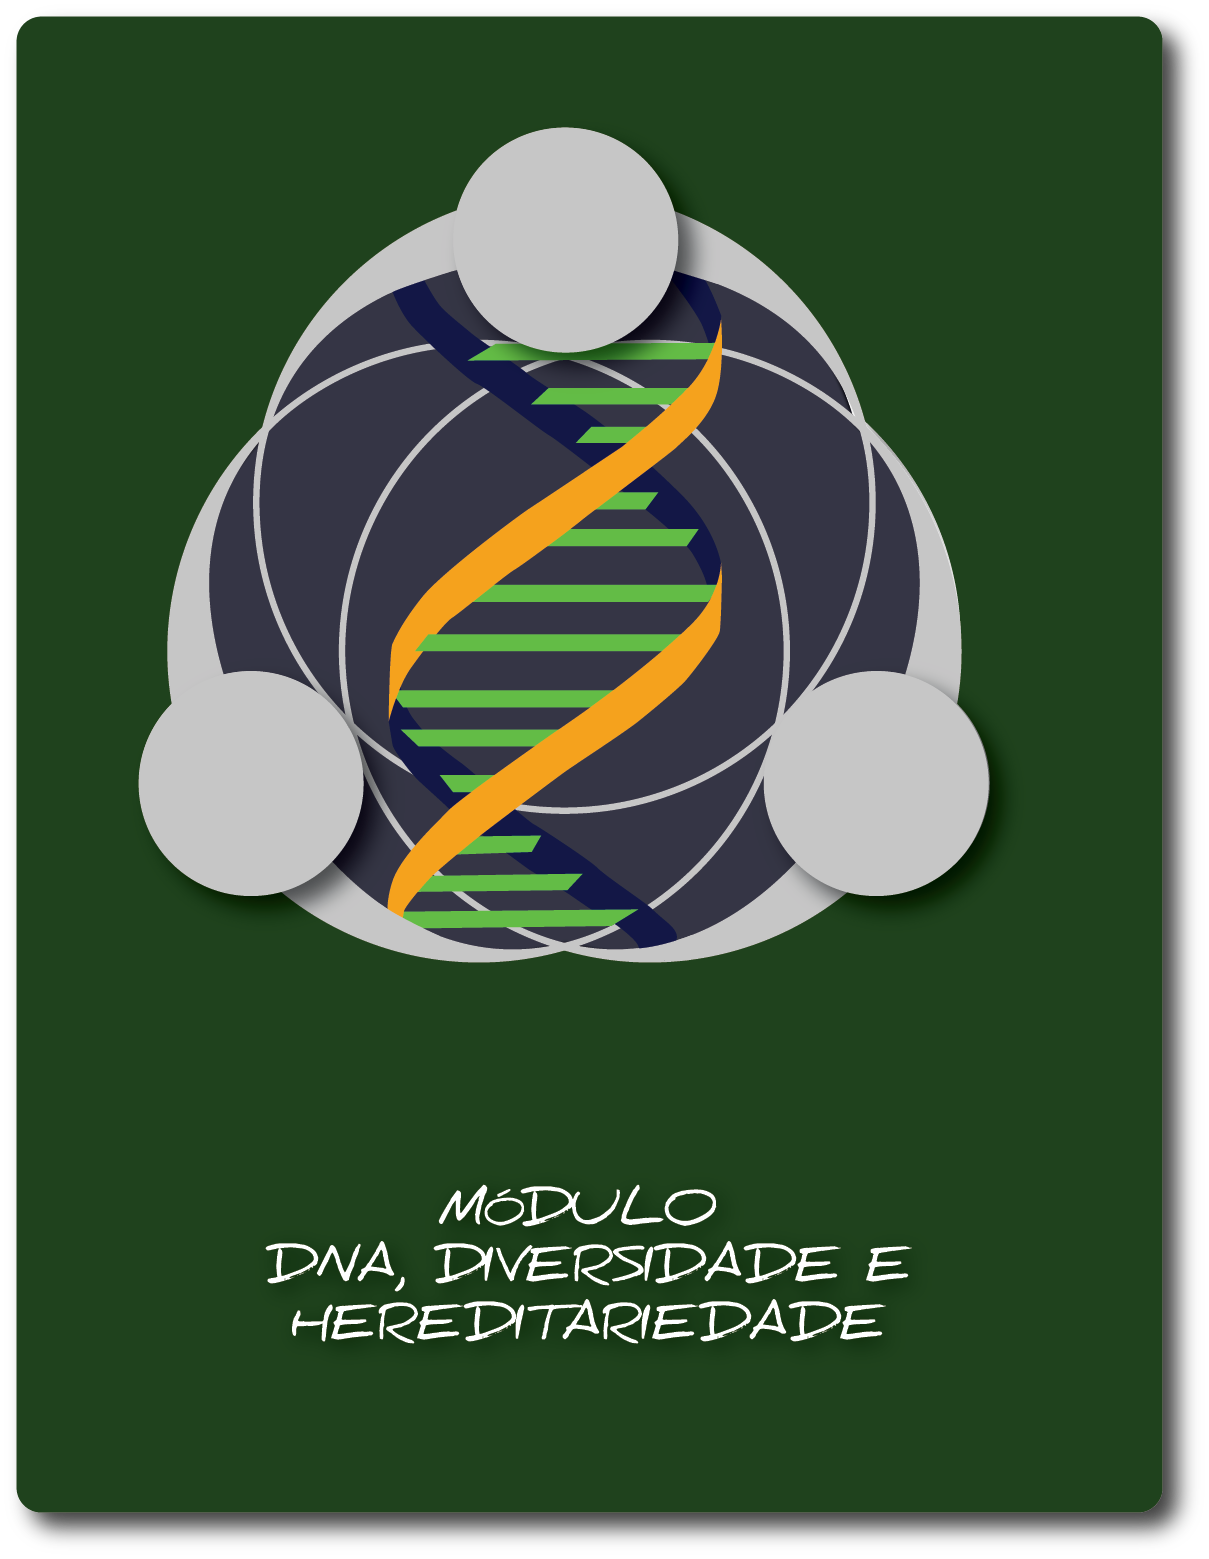 Módulo - DNA, Diversidade e Hereditaridade